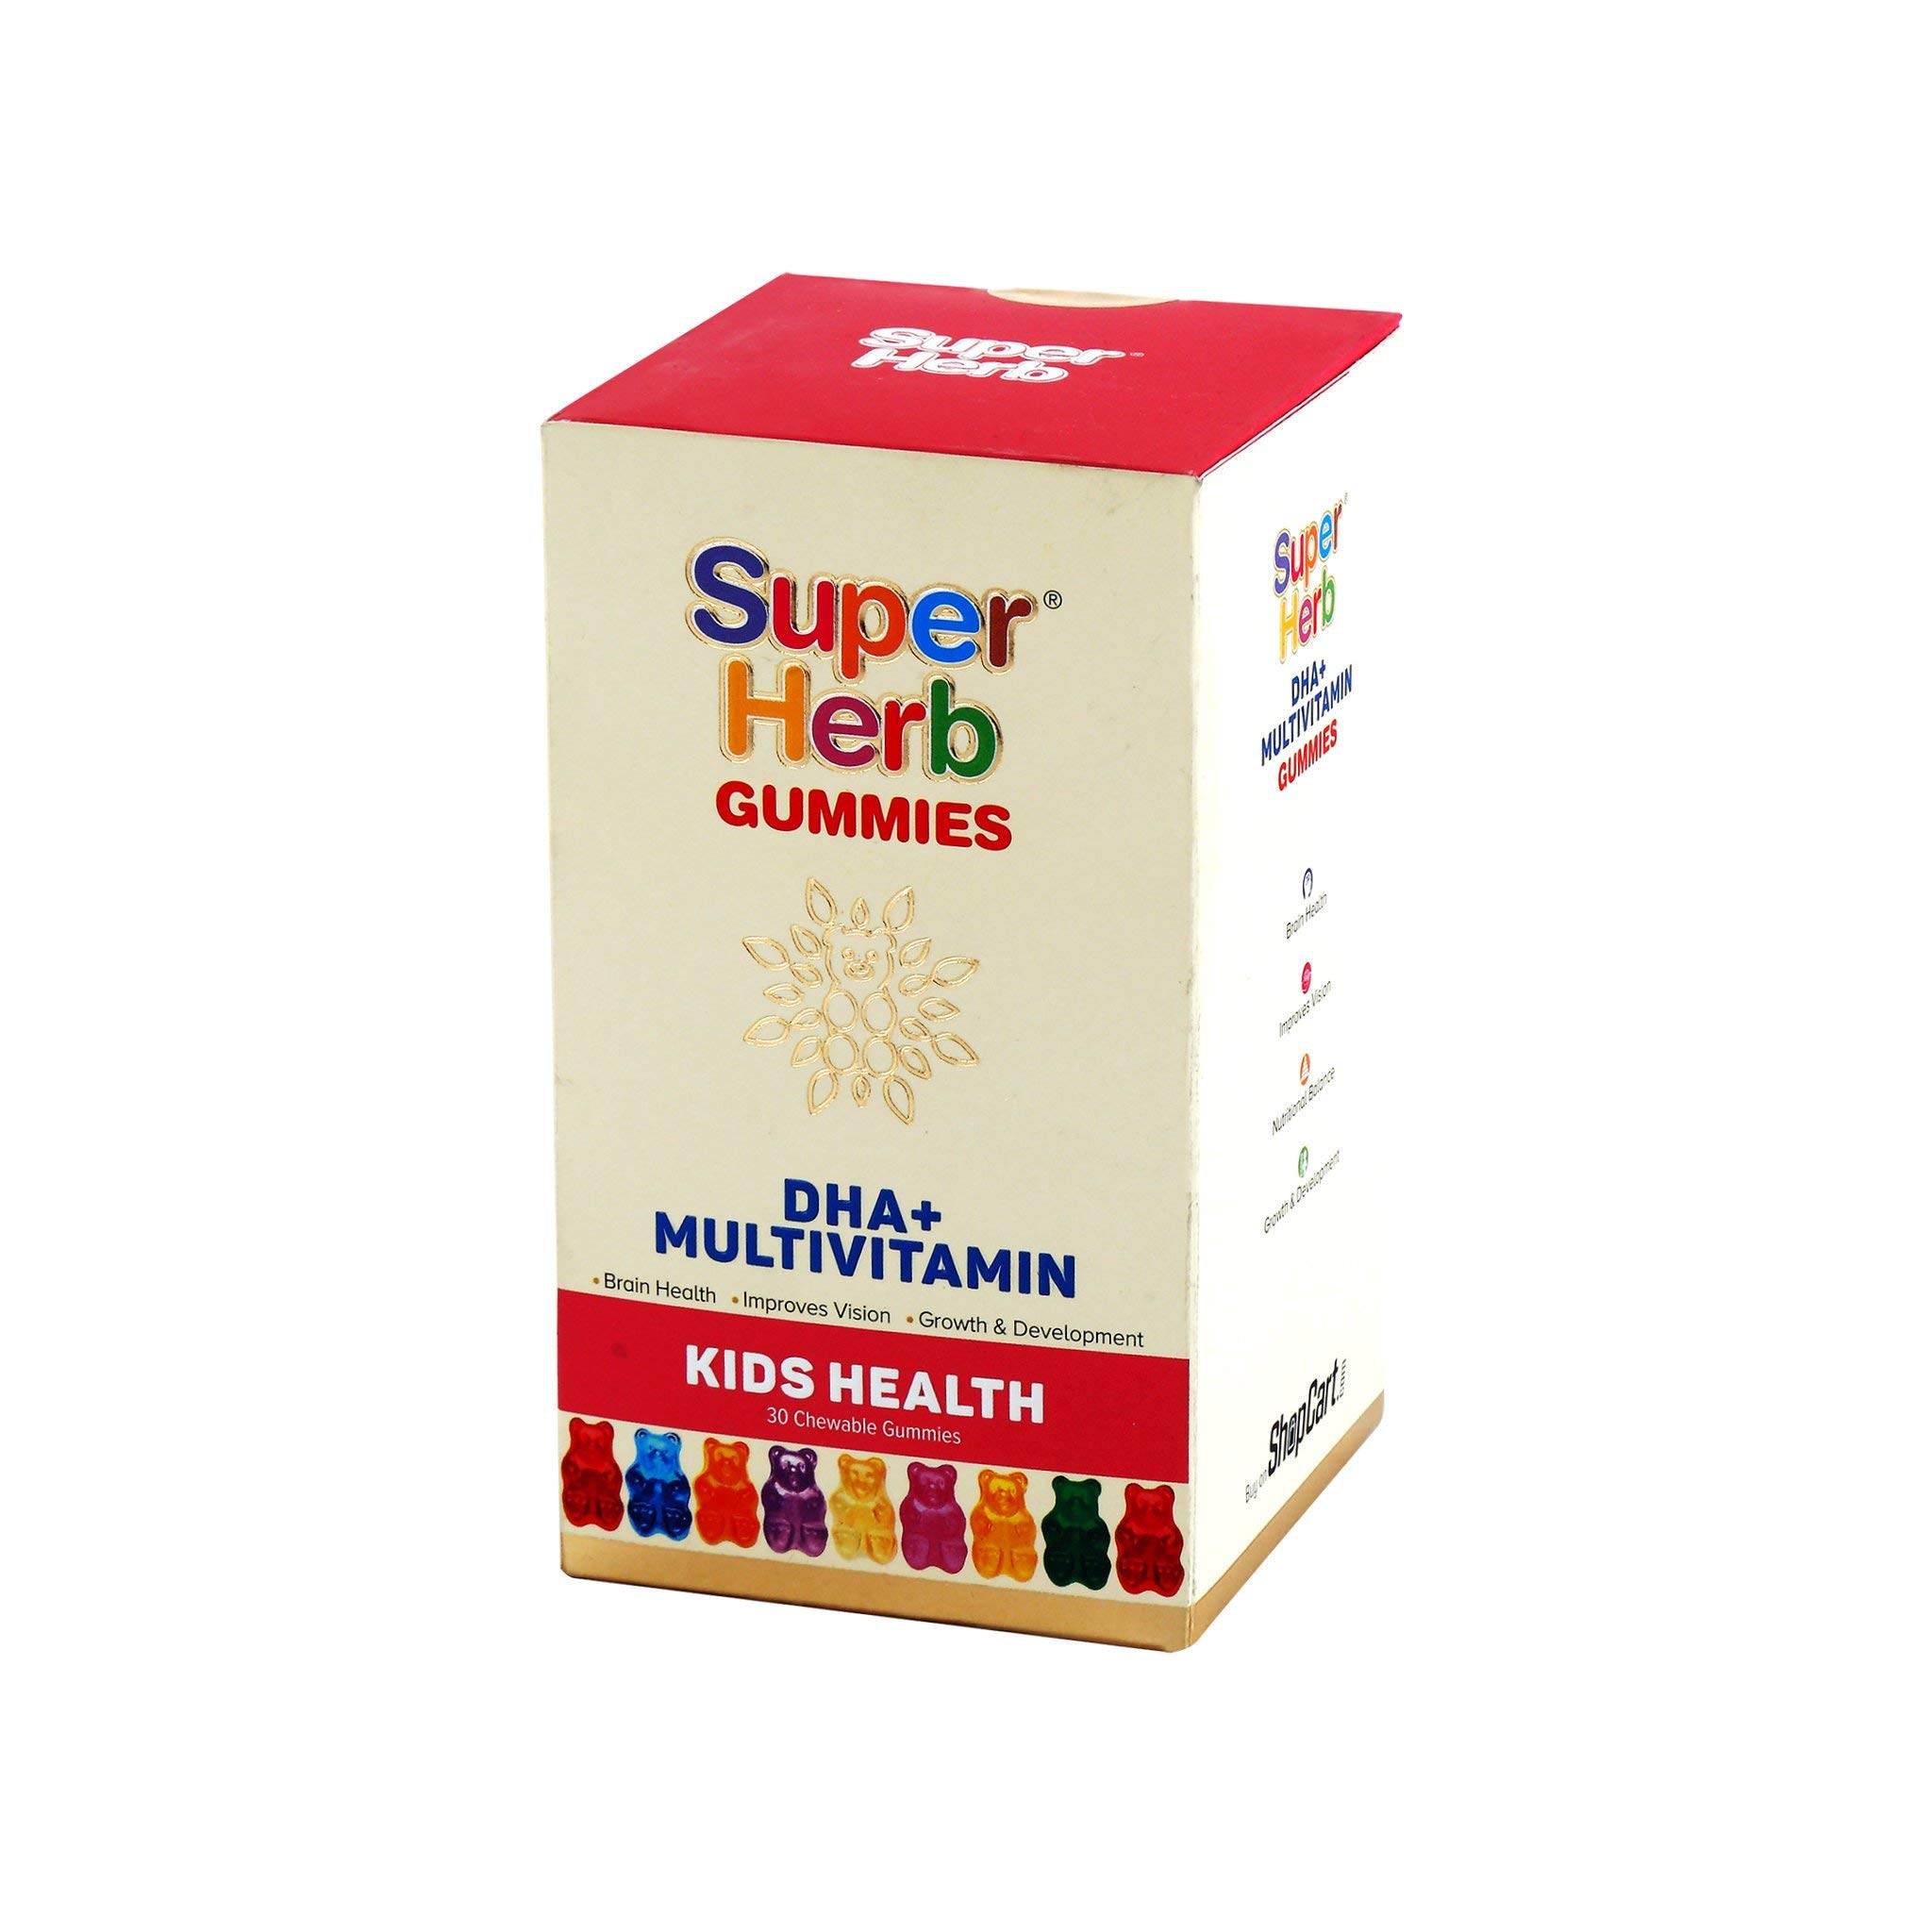 Super Herb Multi Vitamin Gummies - 30 Chewable Gummies